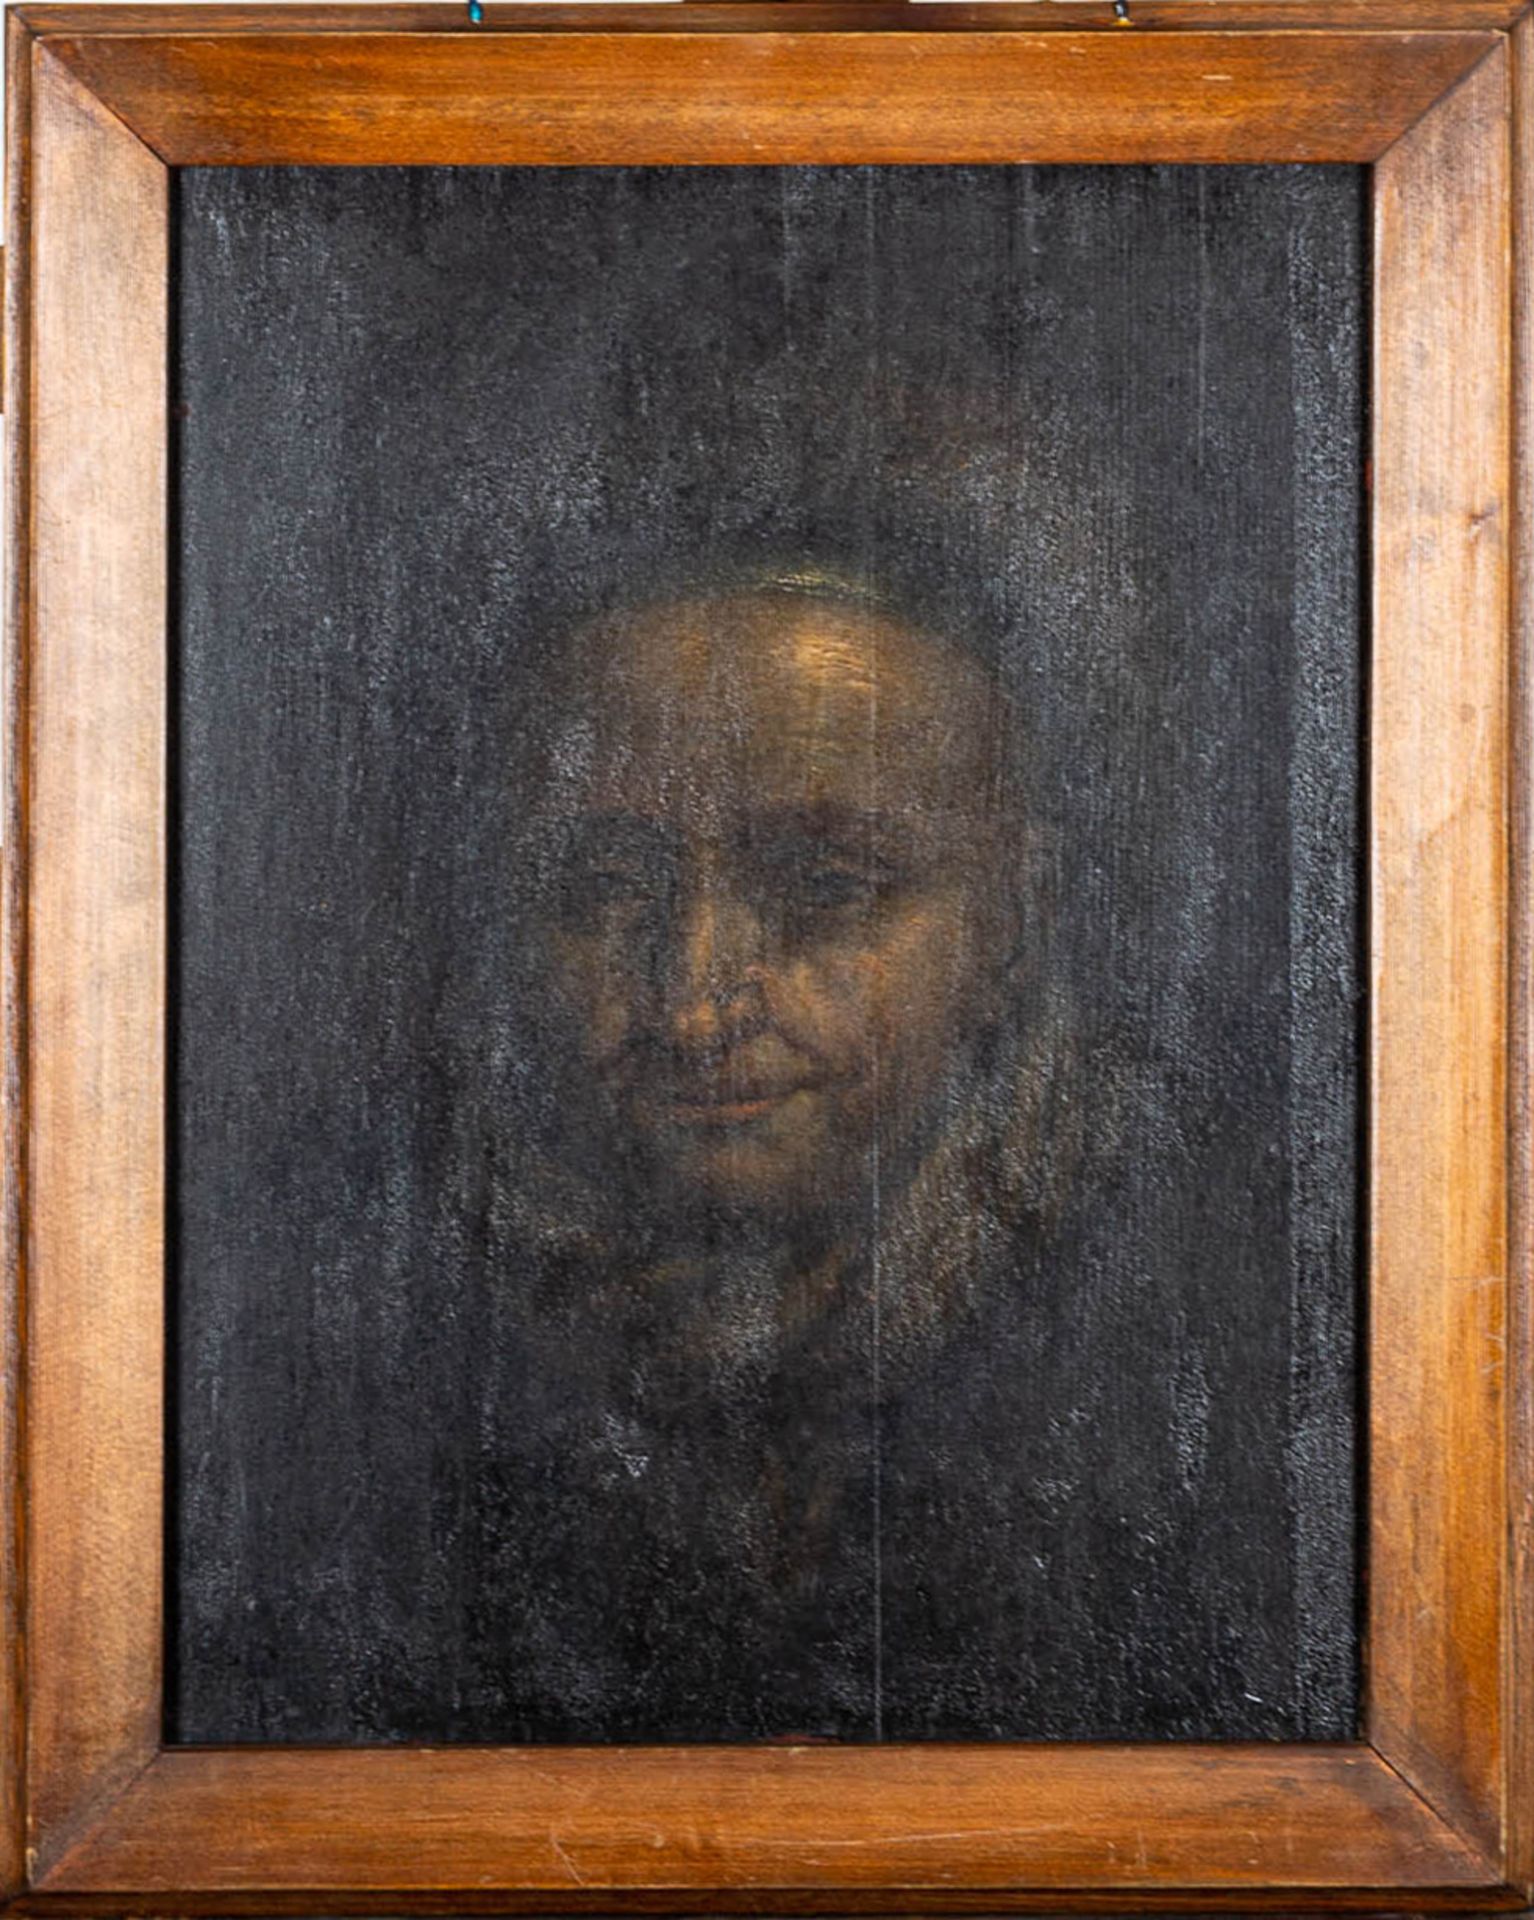 Porträt einer älteren Frau, Gemälde Öl auf Nadelholztafel, 18. oder 19. Jhdt; q